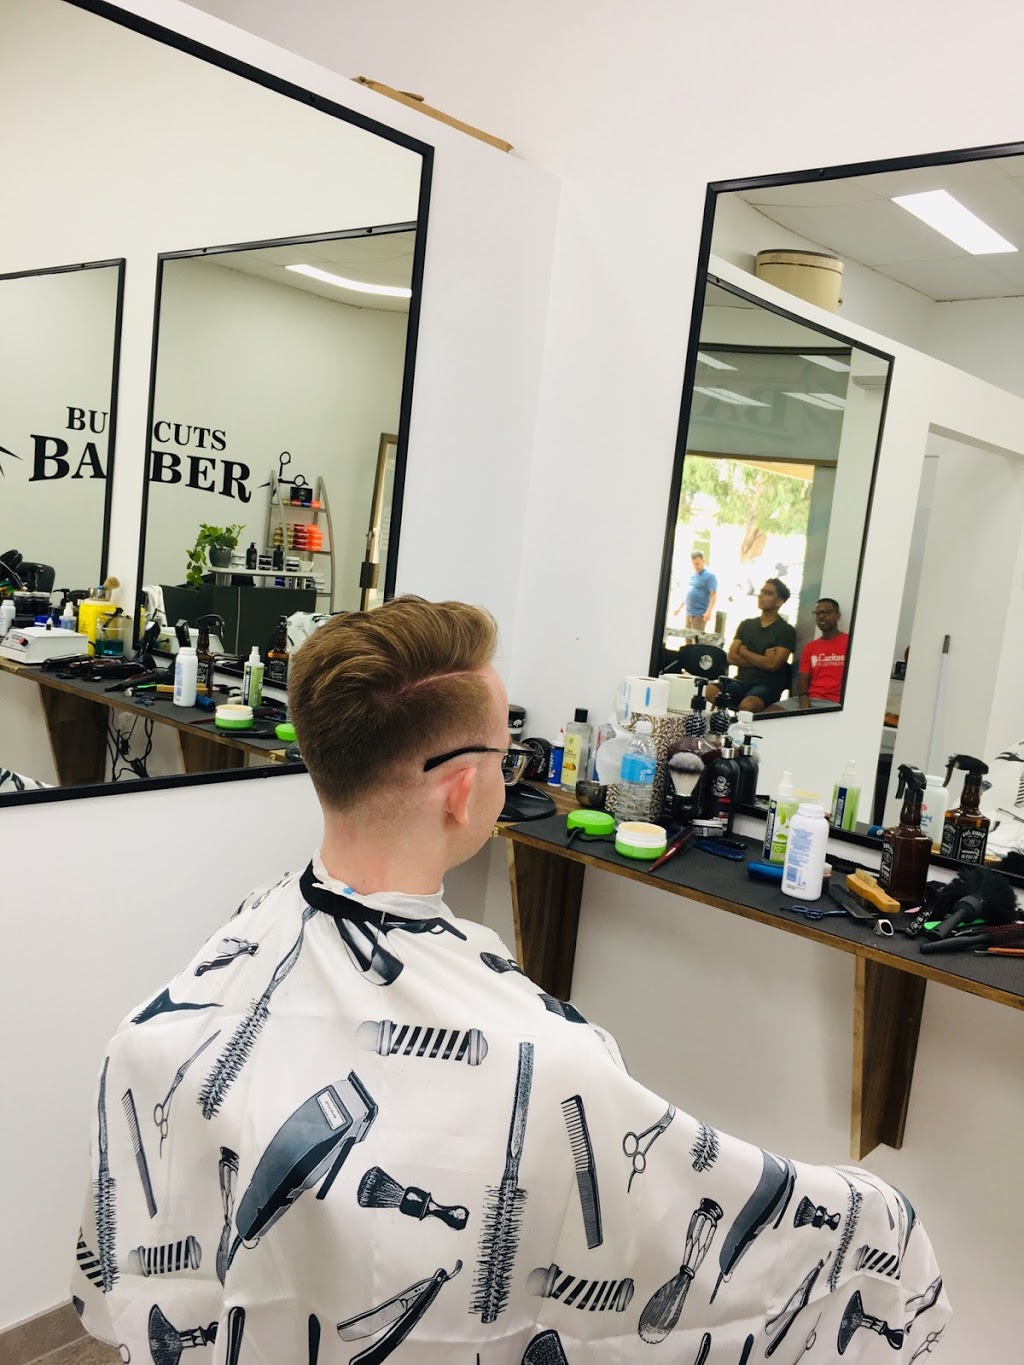 Buzz Cuts Barber | hair care | 2/25 Culloton Cres, Balga WA 6061, Australia | 0422834319 OR +61 422 834 319